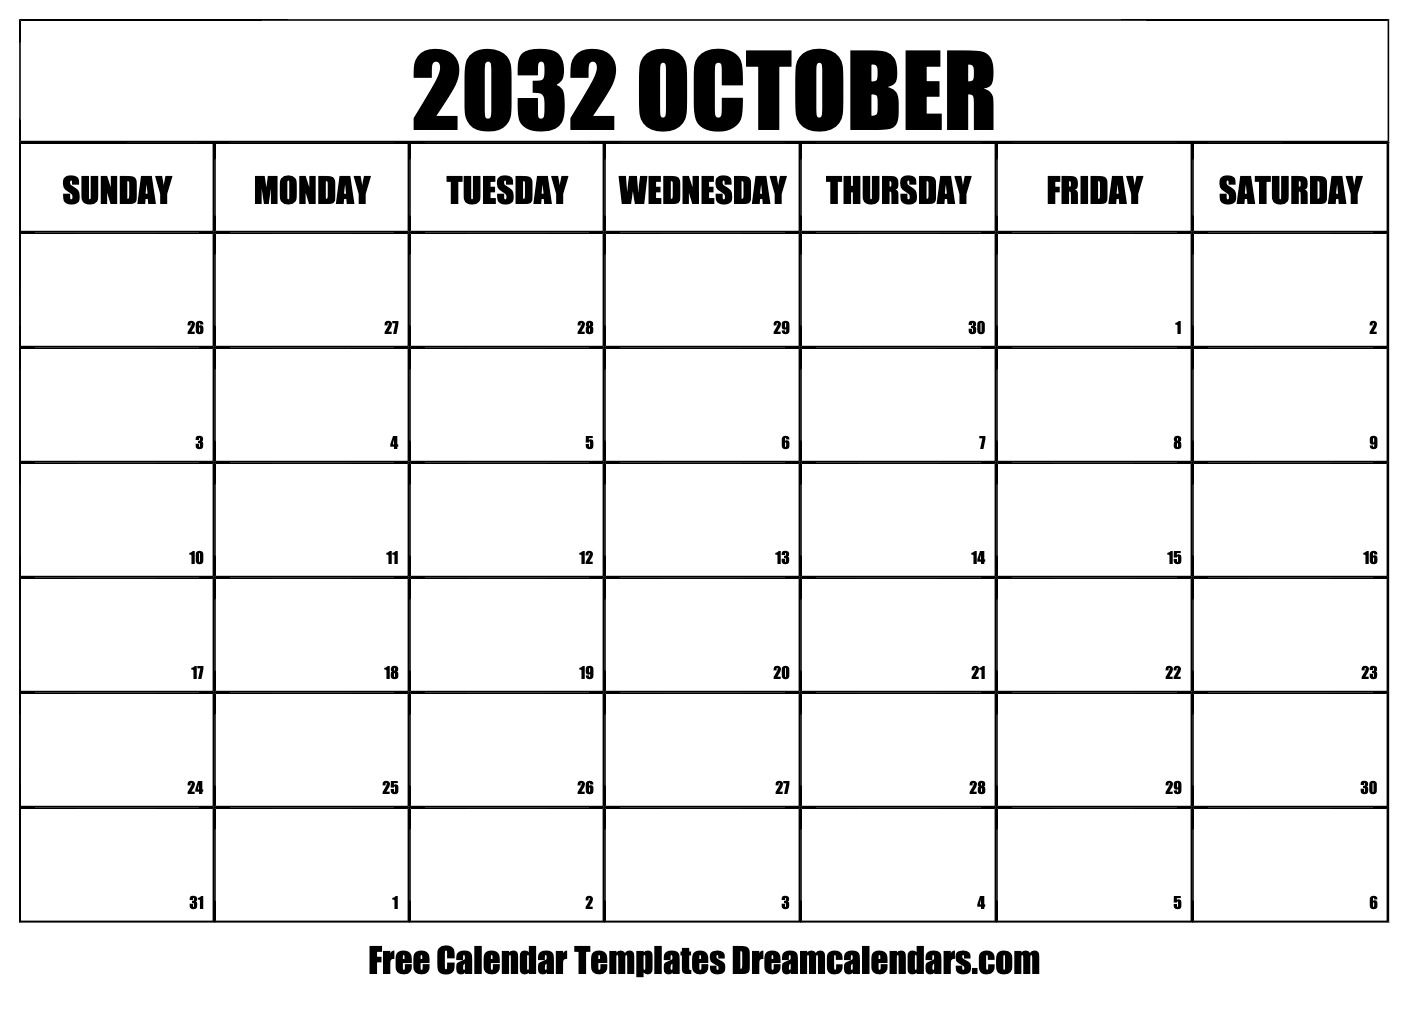 October 2032 calendar free blank printable templates